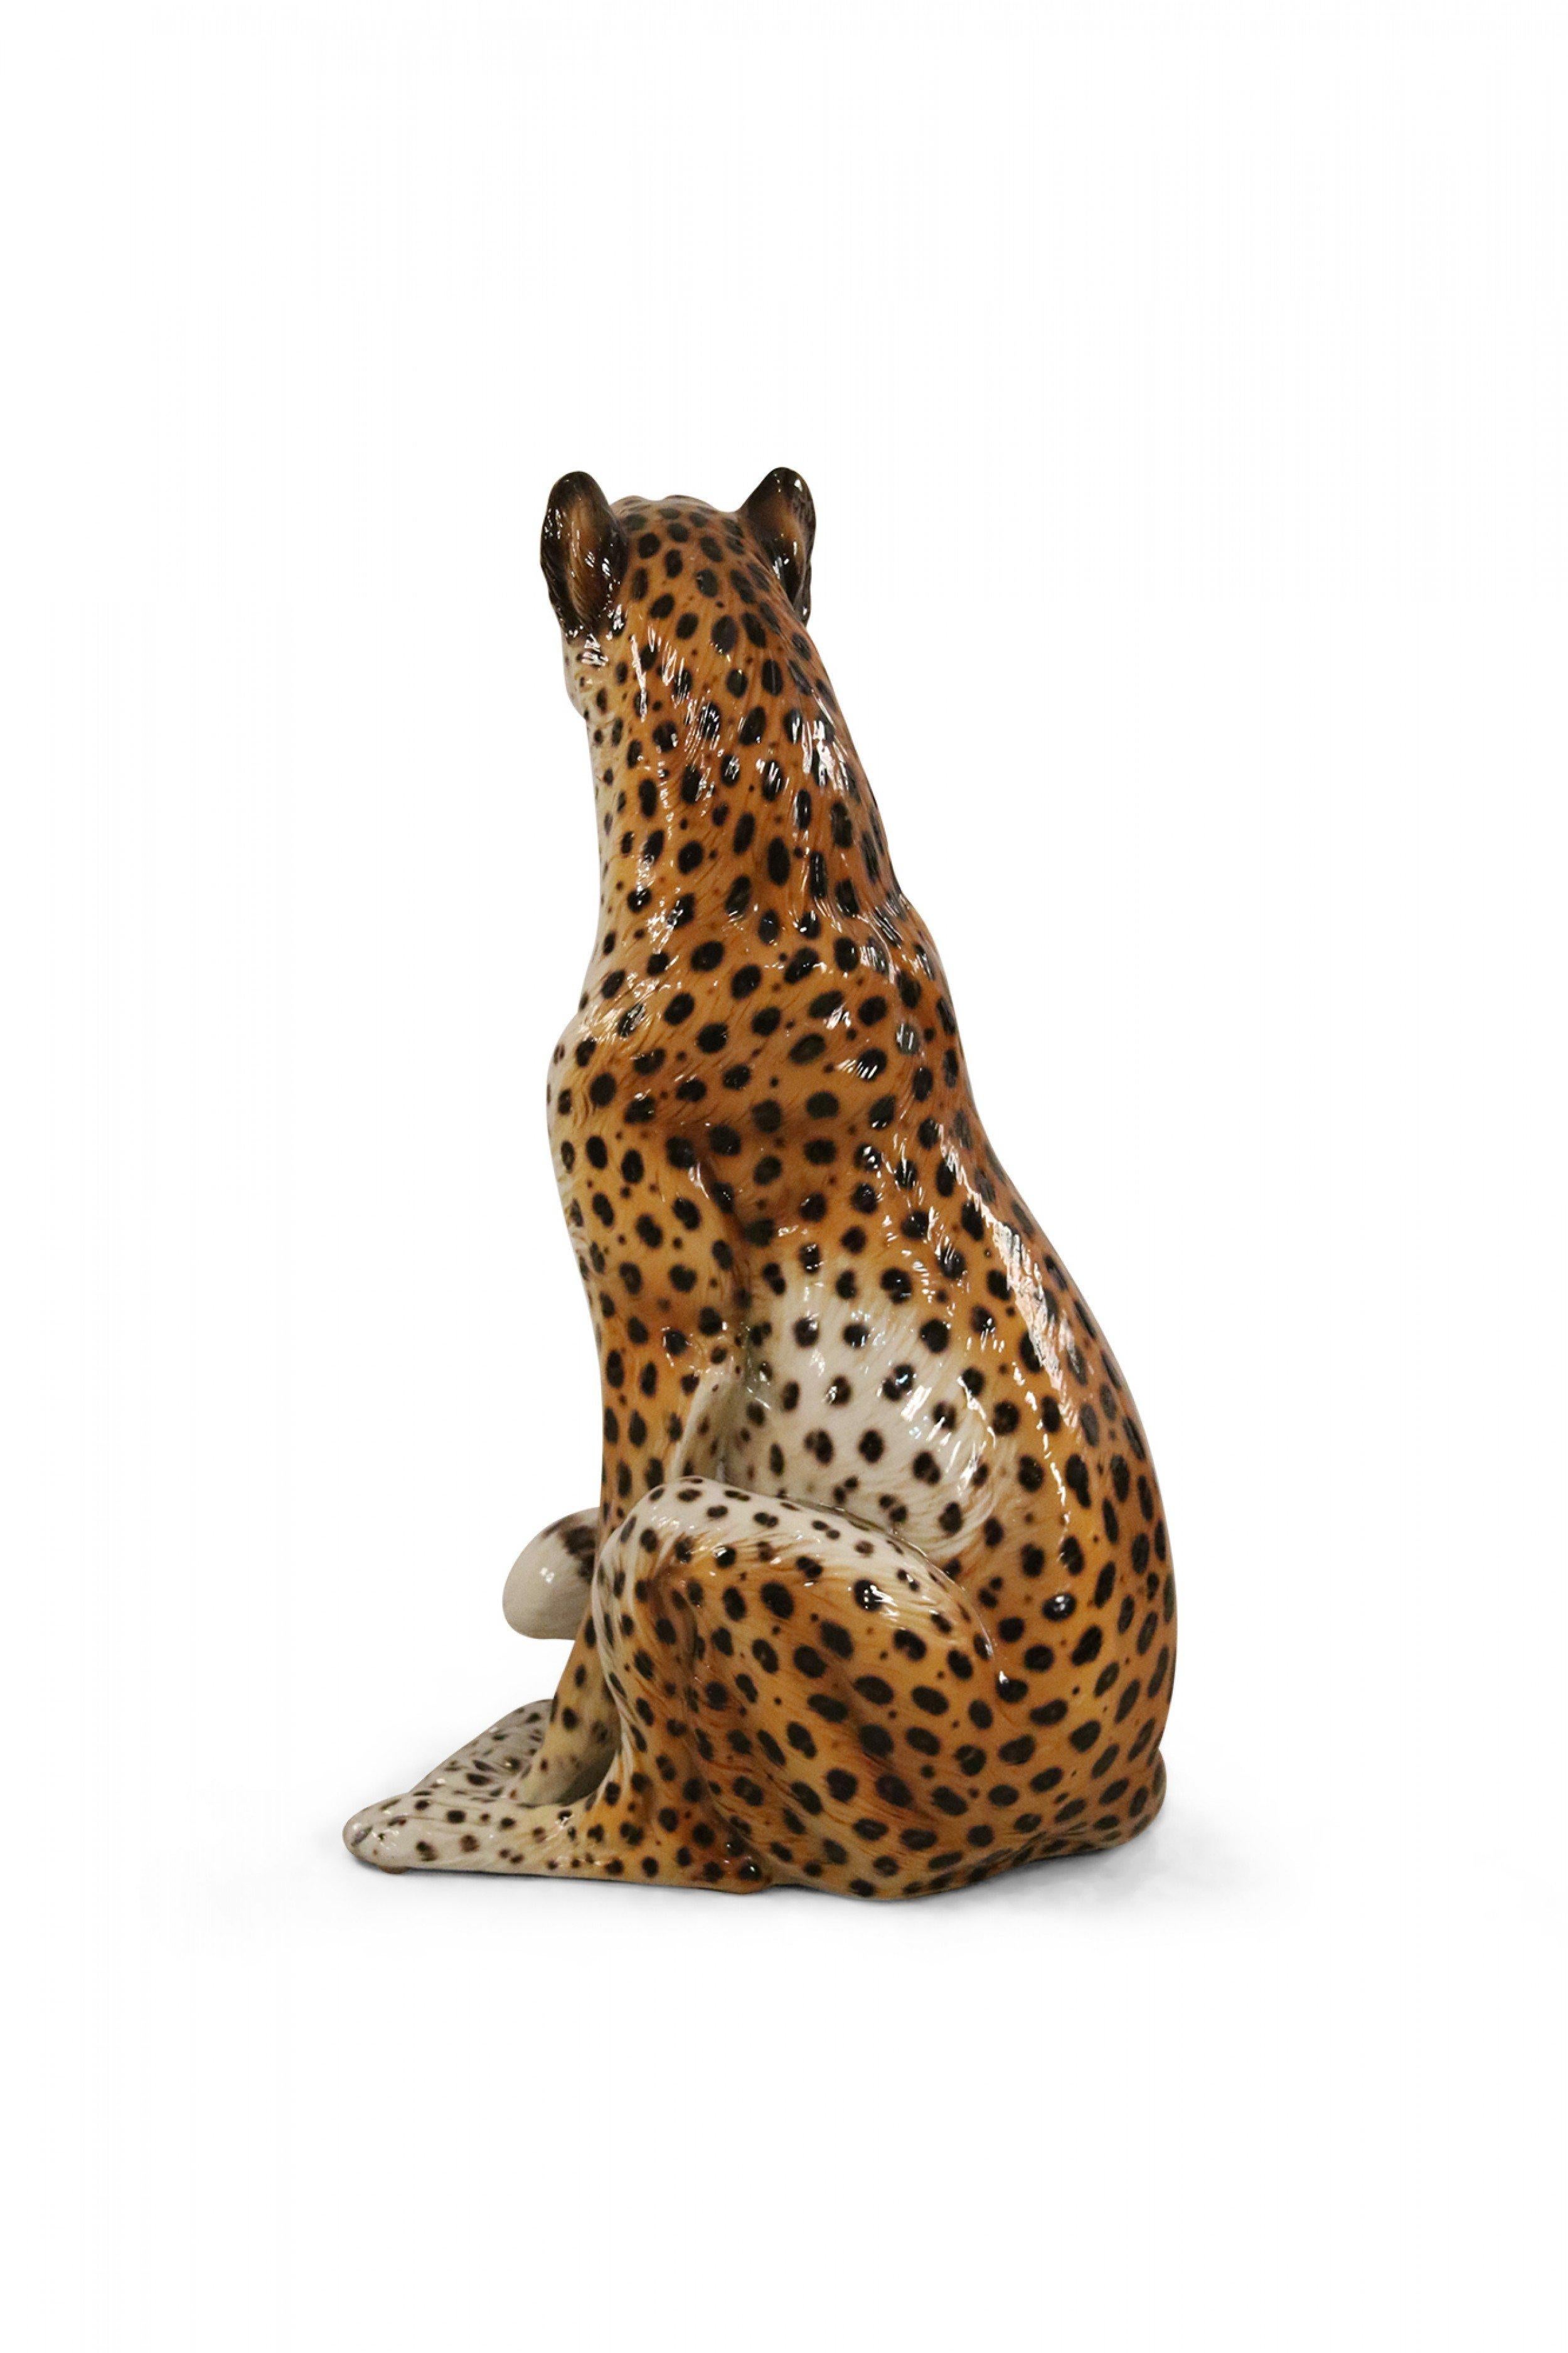 Maiolica Italian Majolica Seated Leopard Statue